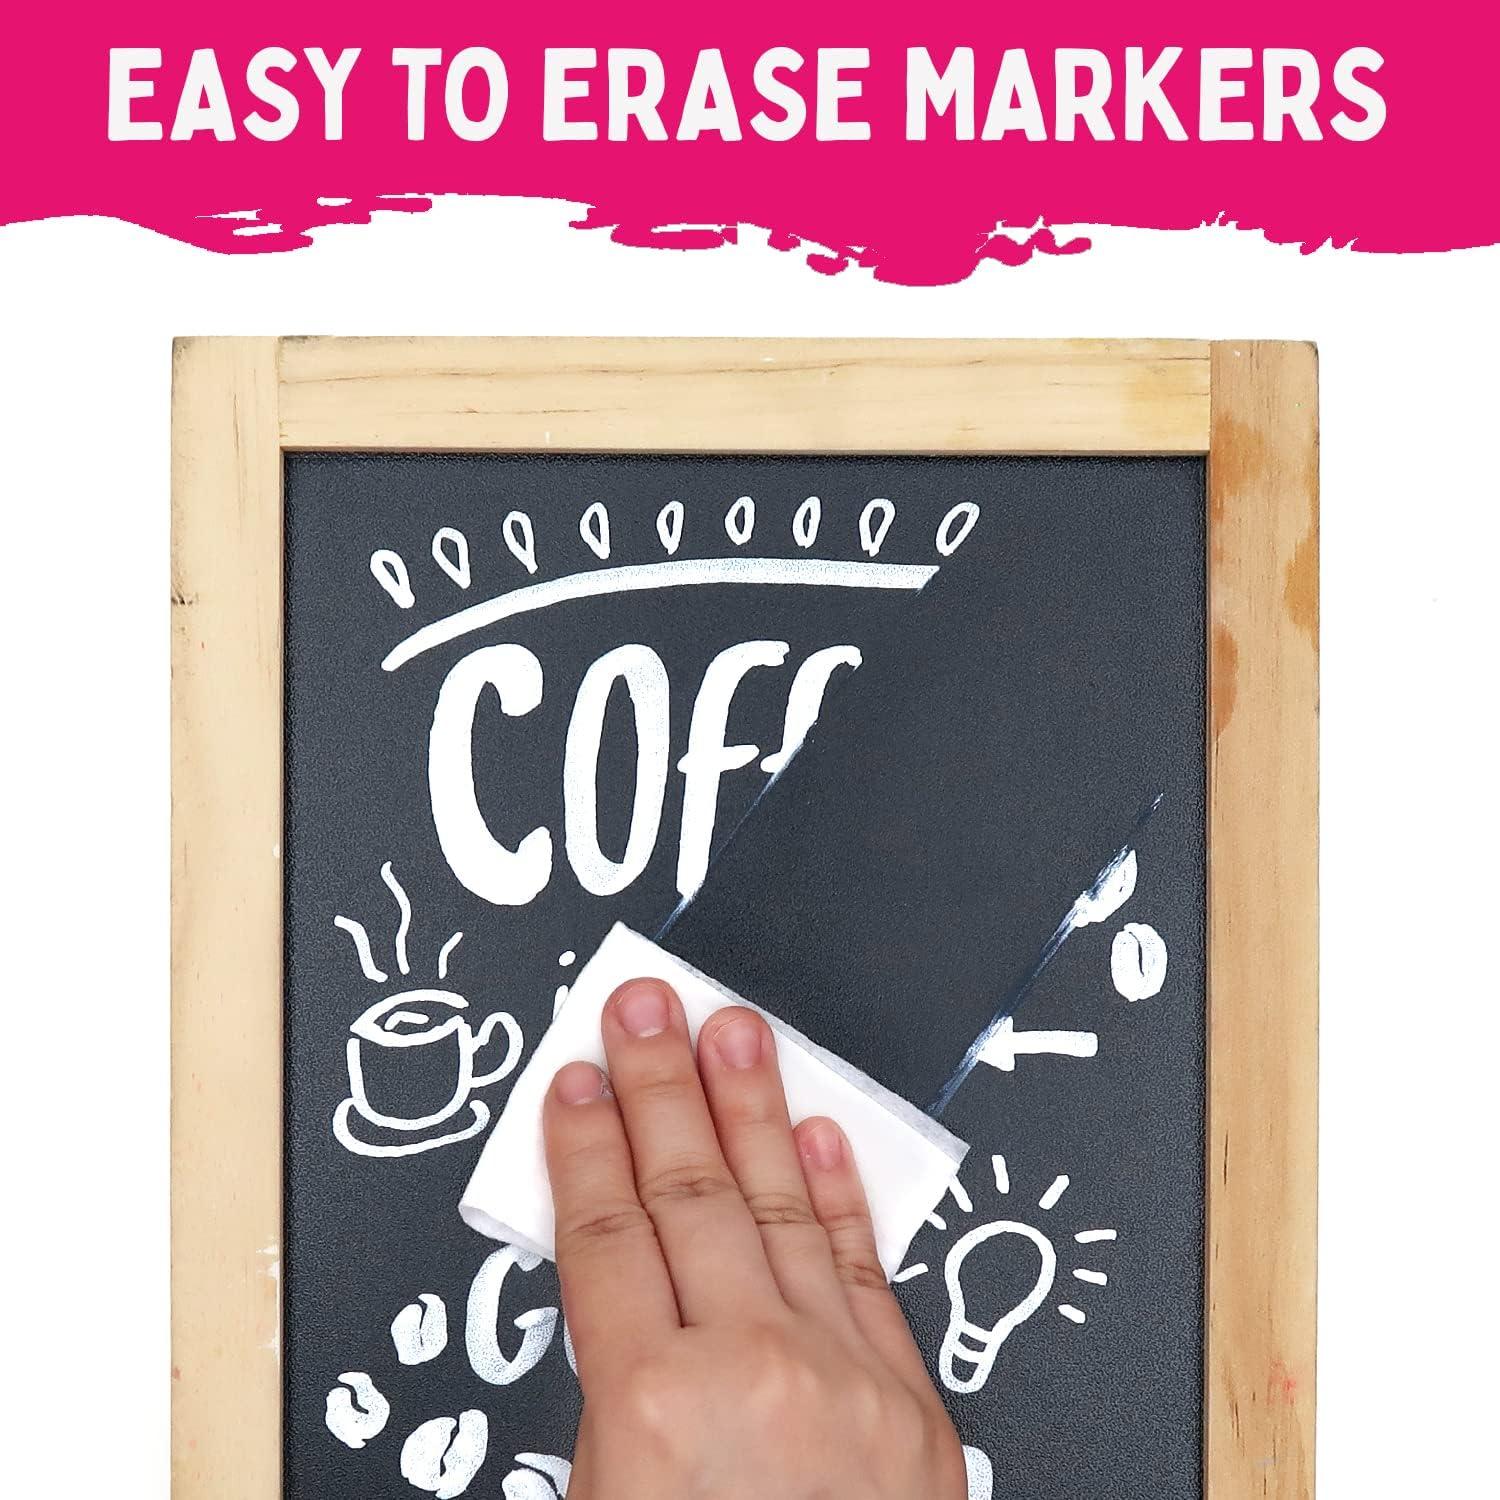 White Chalk Markers Fine Tip (4 Pack 3mm) - Wet & Dry Erase Chalk